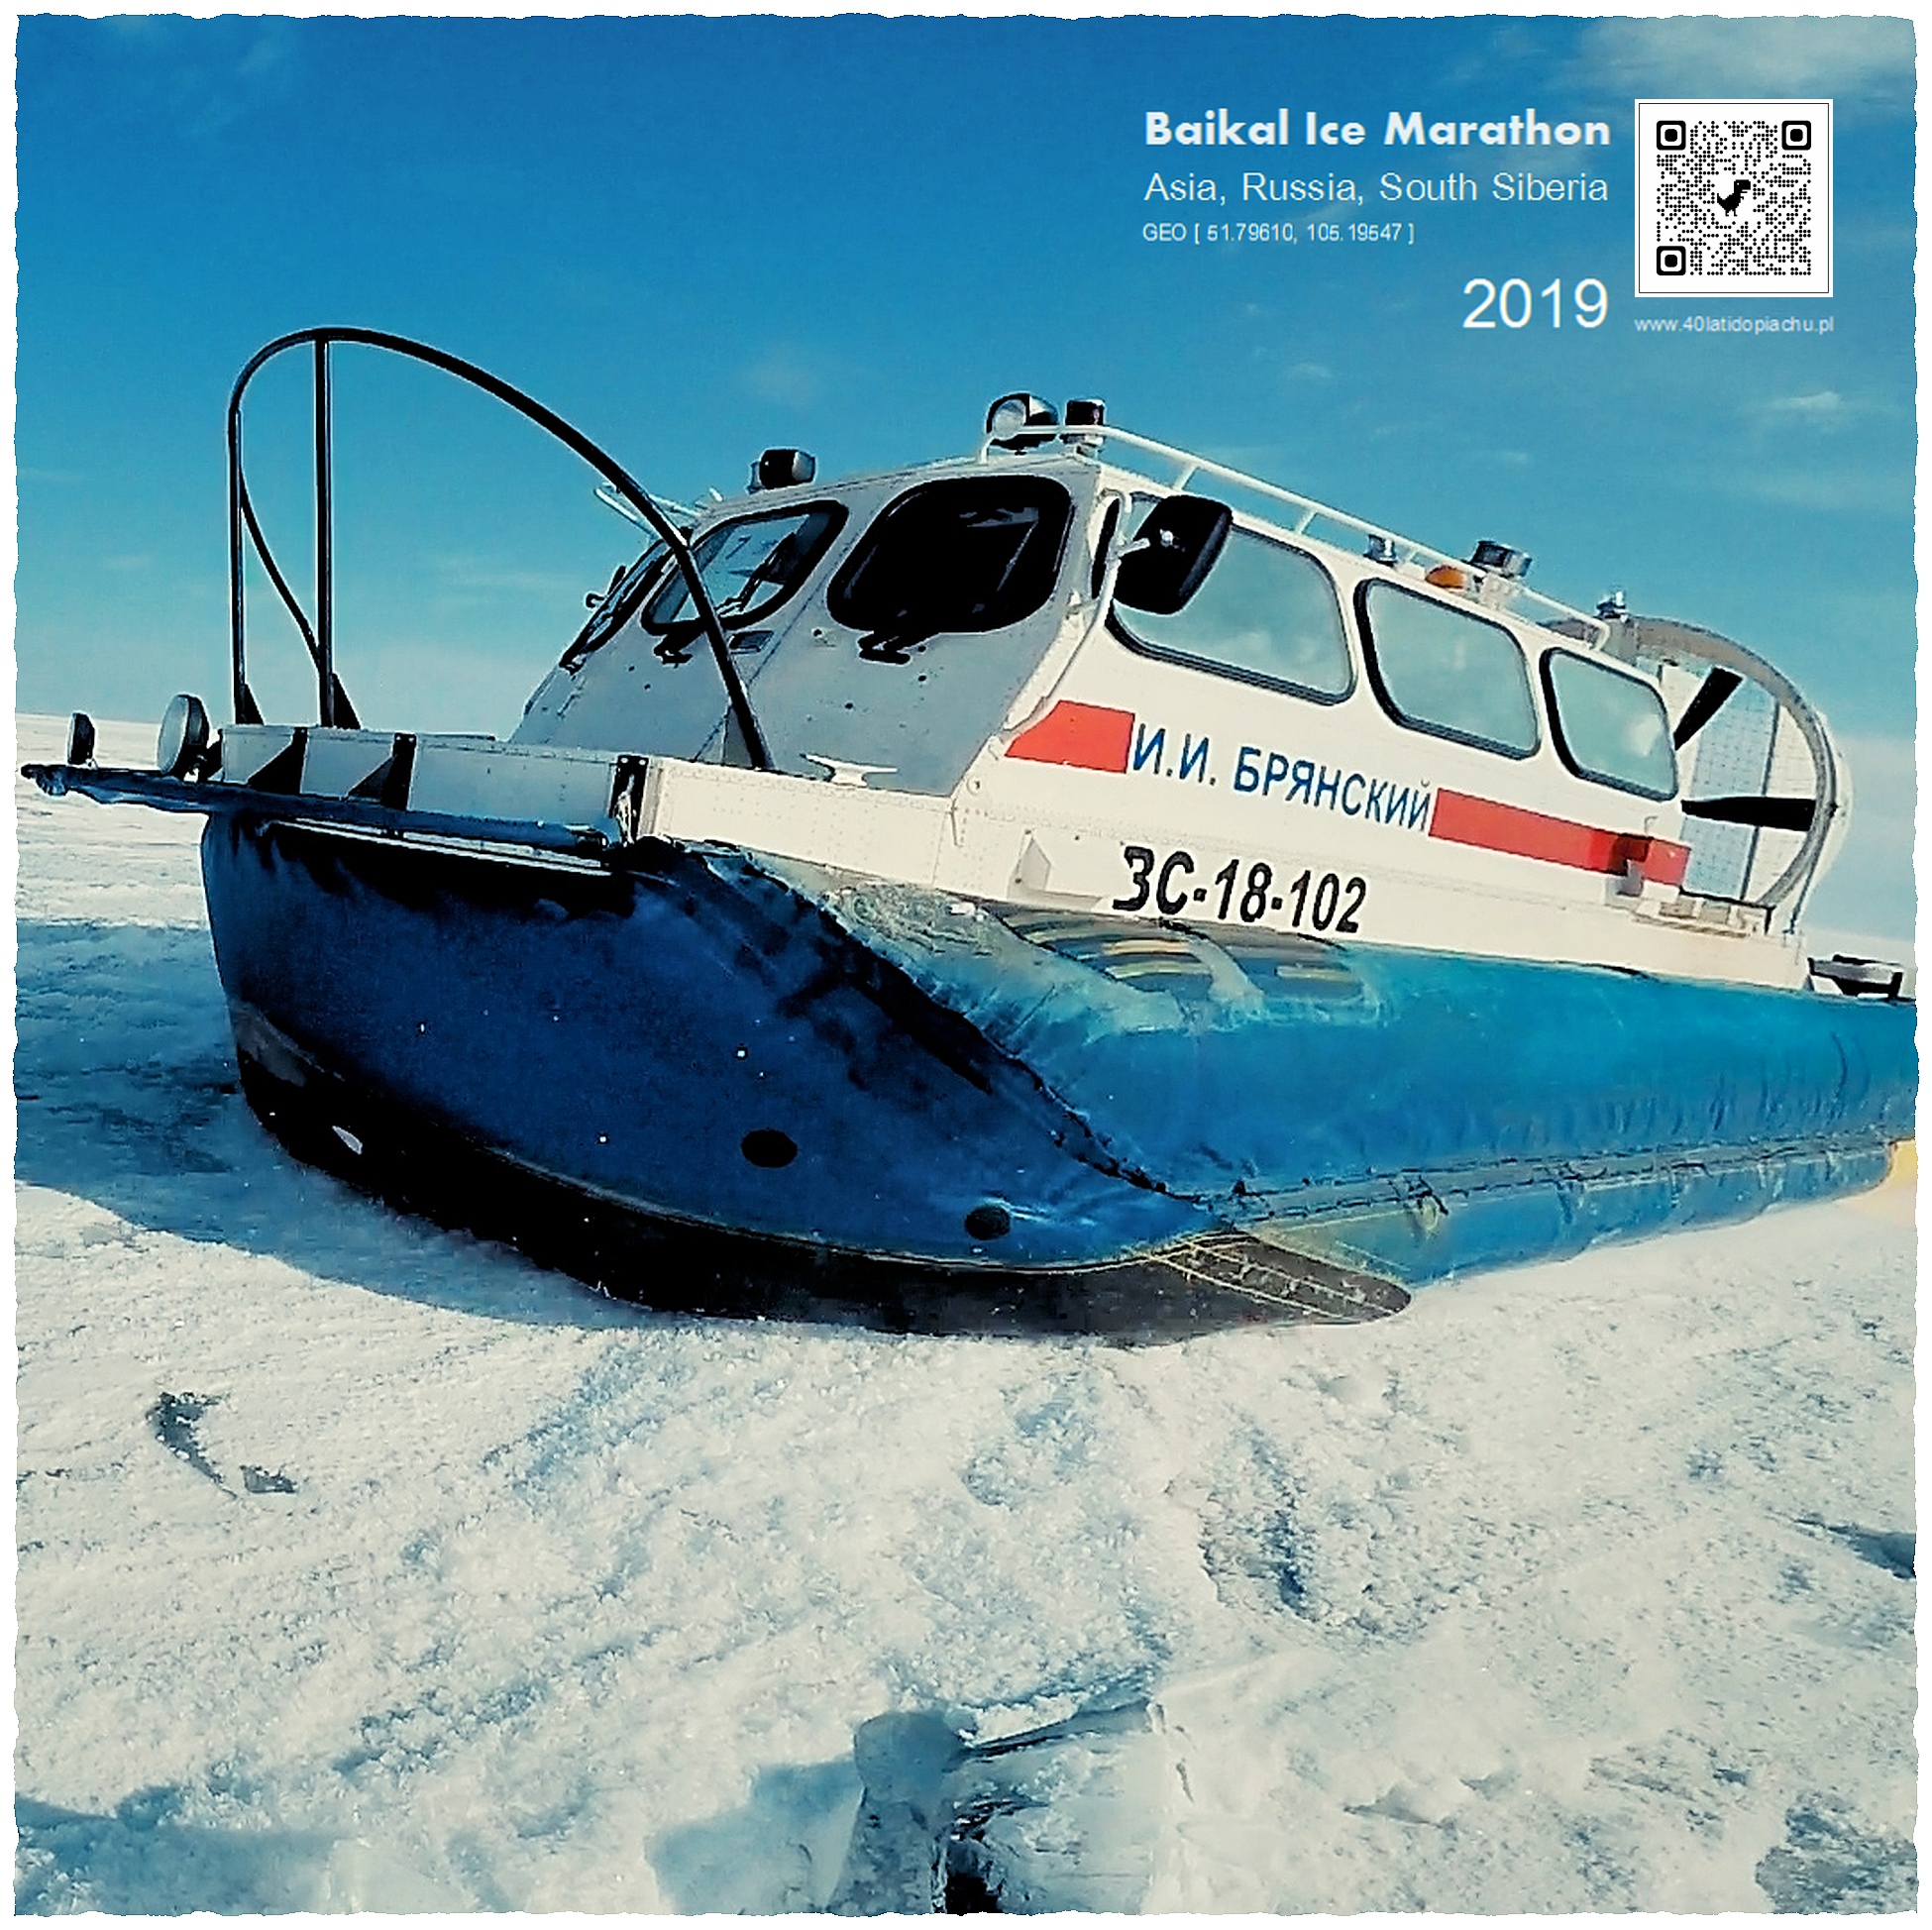 Rosja, Syberia, Bajkal Ice Marathon